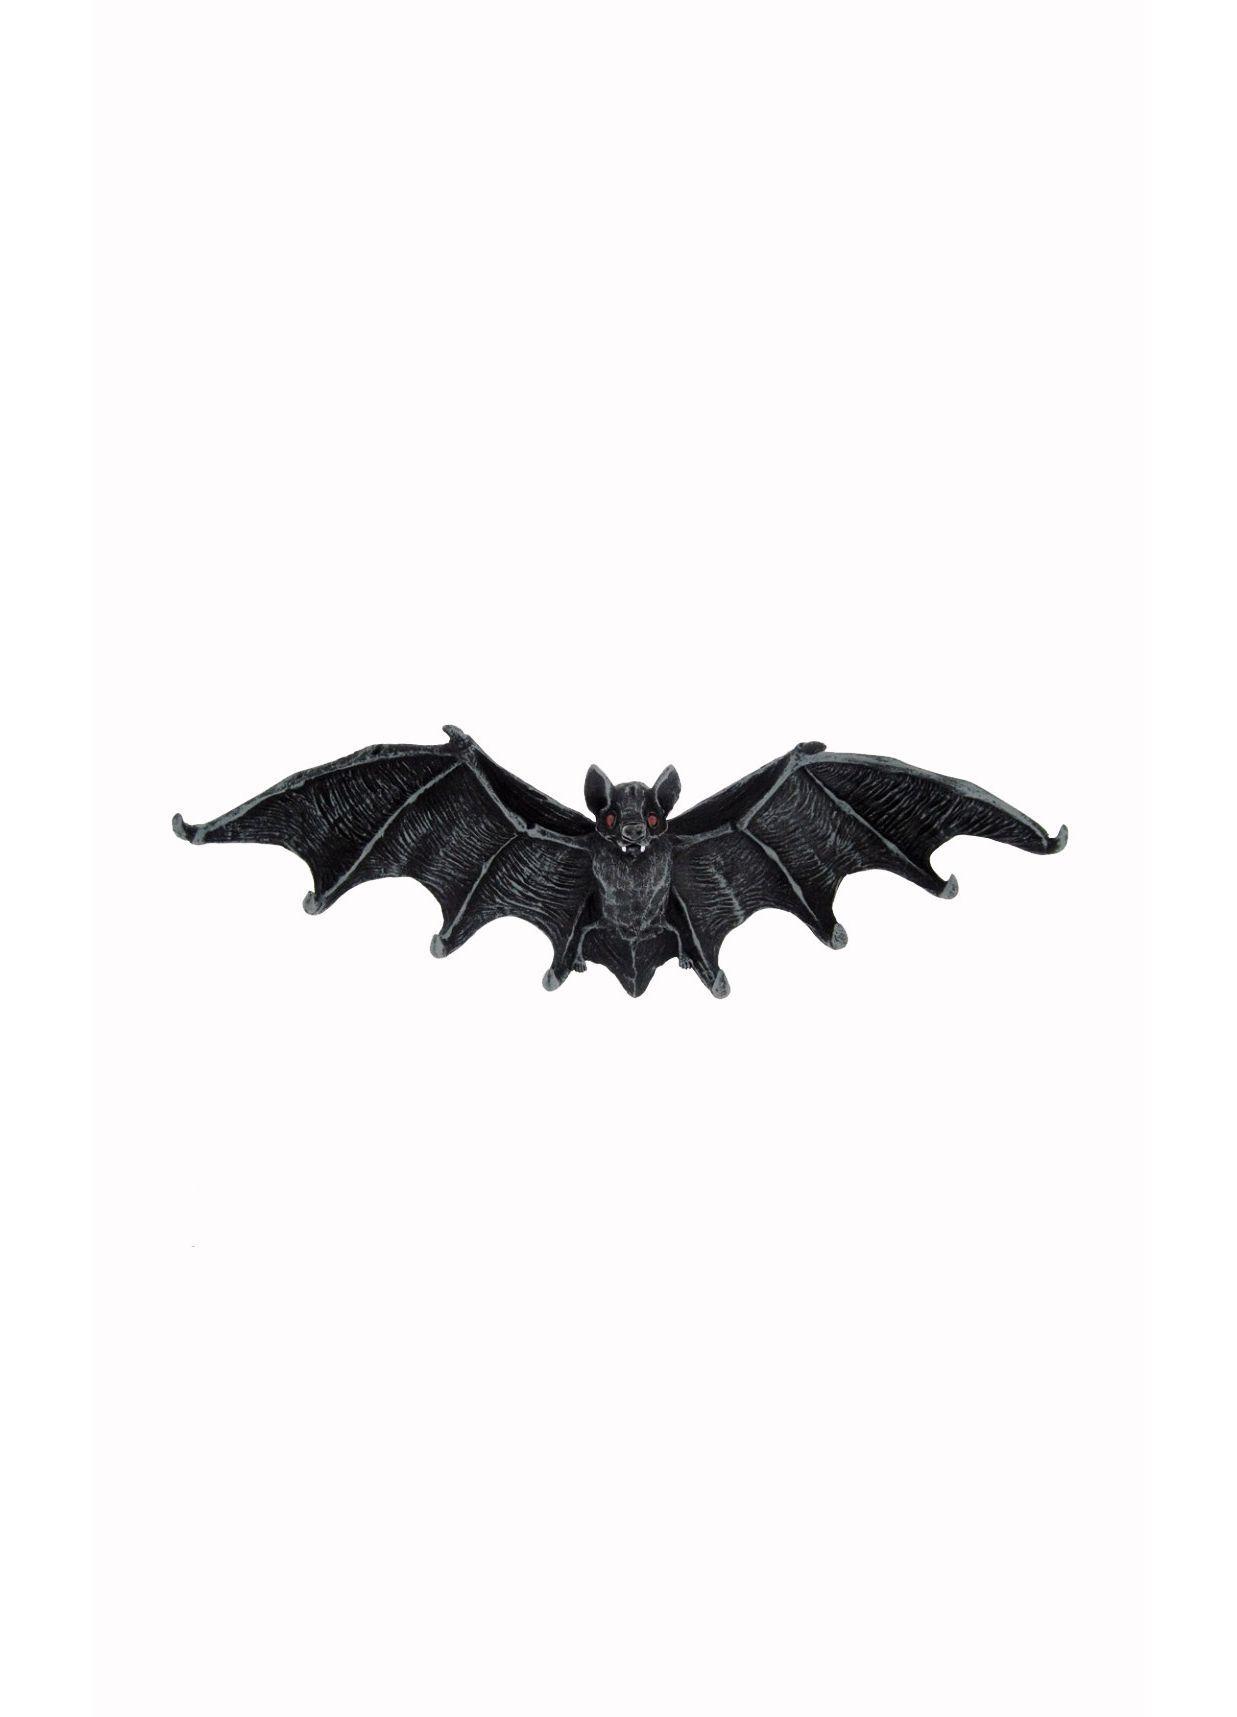 Red and Black Bat Logo - Nemesis Now Gothic Black Bat Key Hanger